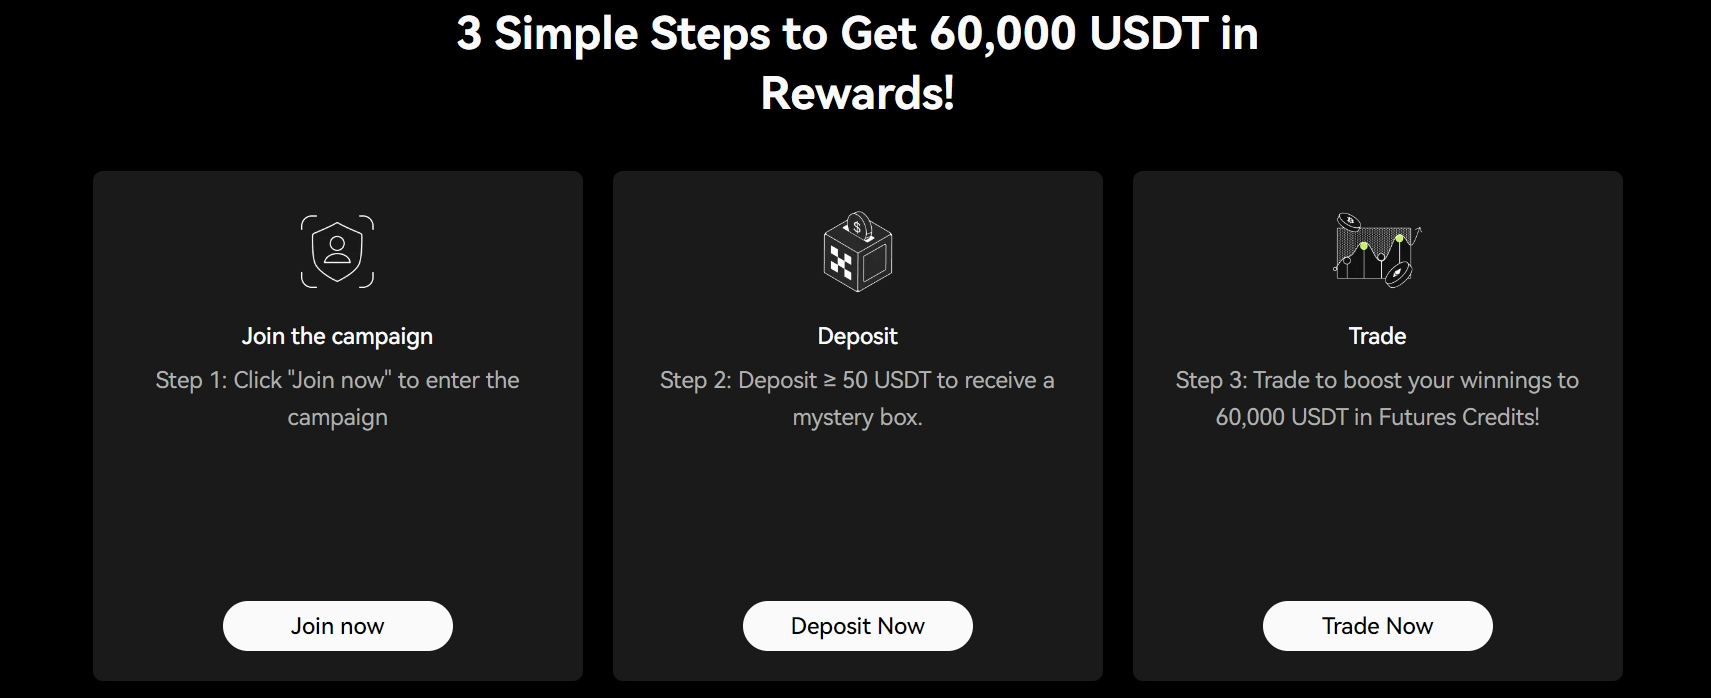 3 Simple Steps to Earn 60,000 USDT on OKX